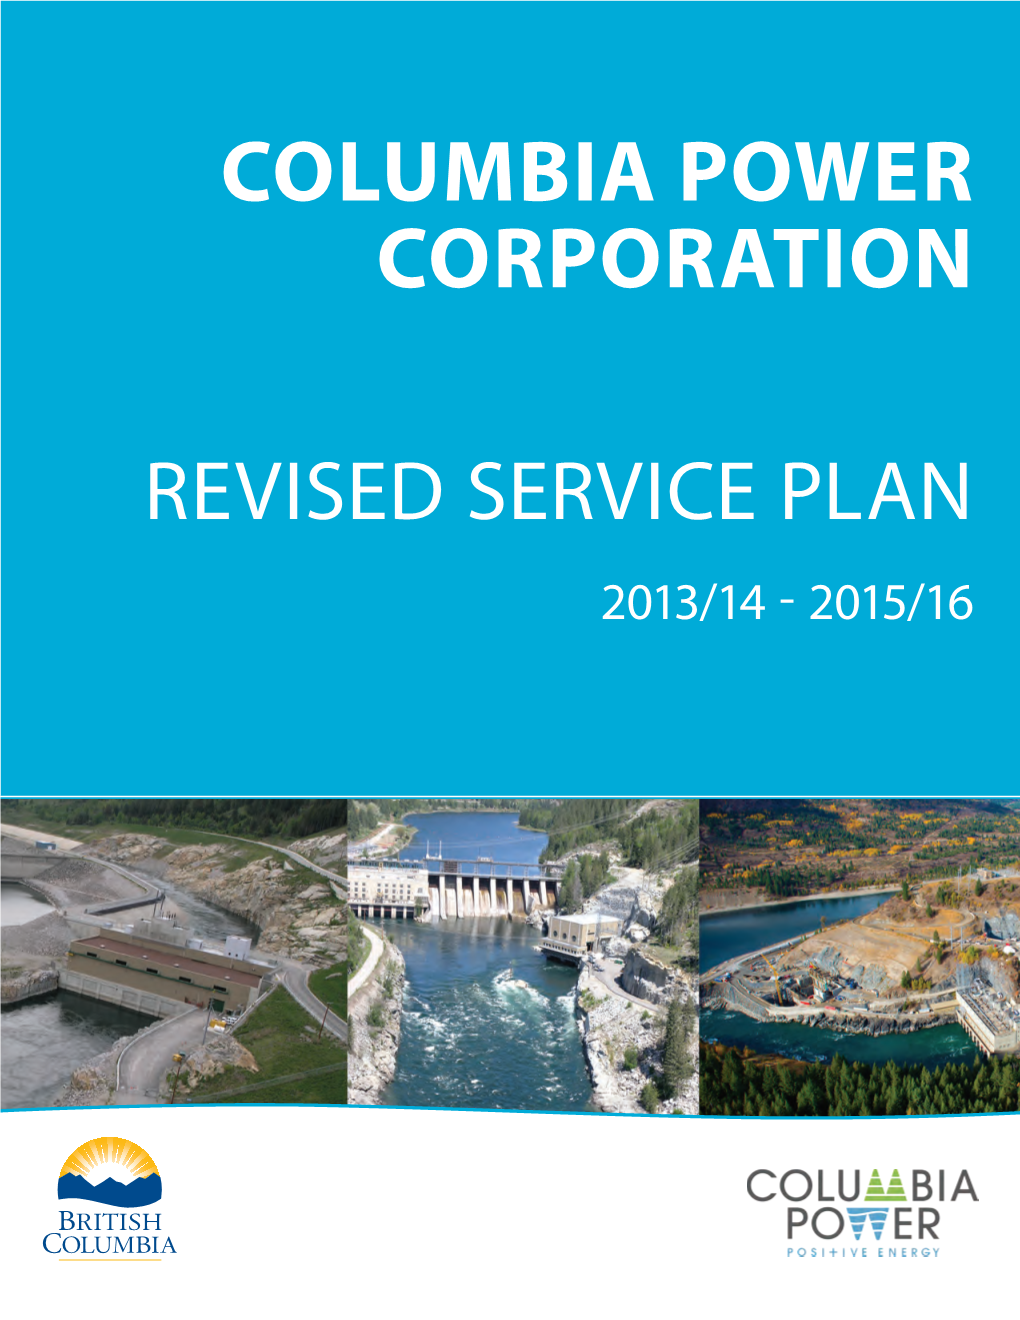 Revised Service Plan 2013/14-2015/16